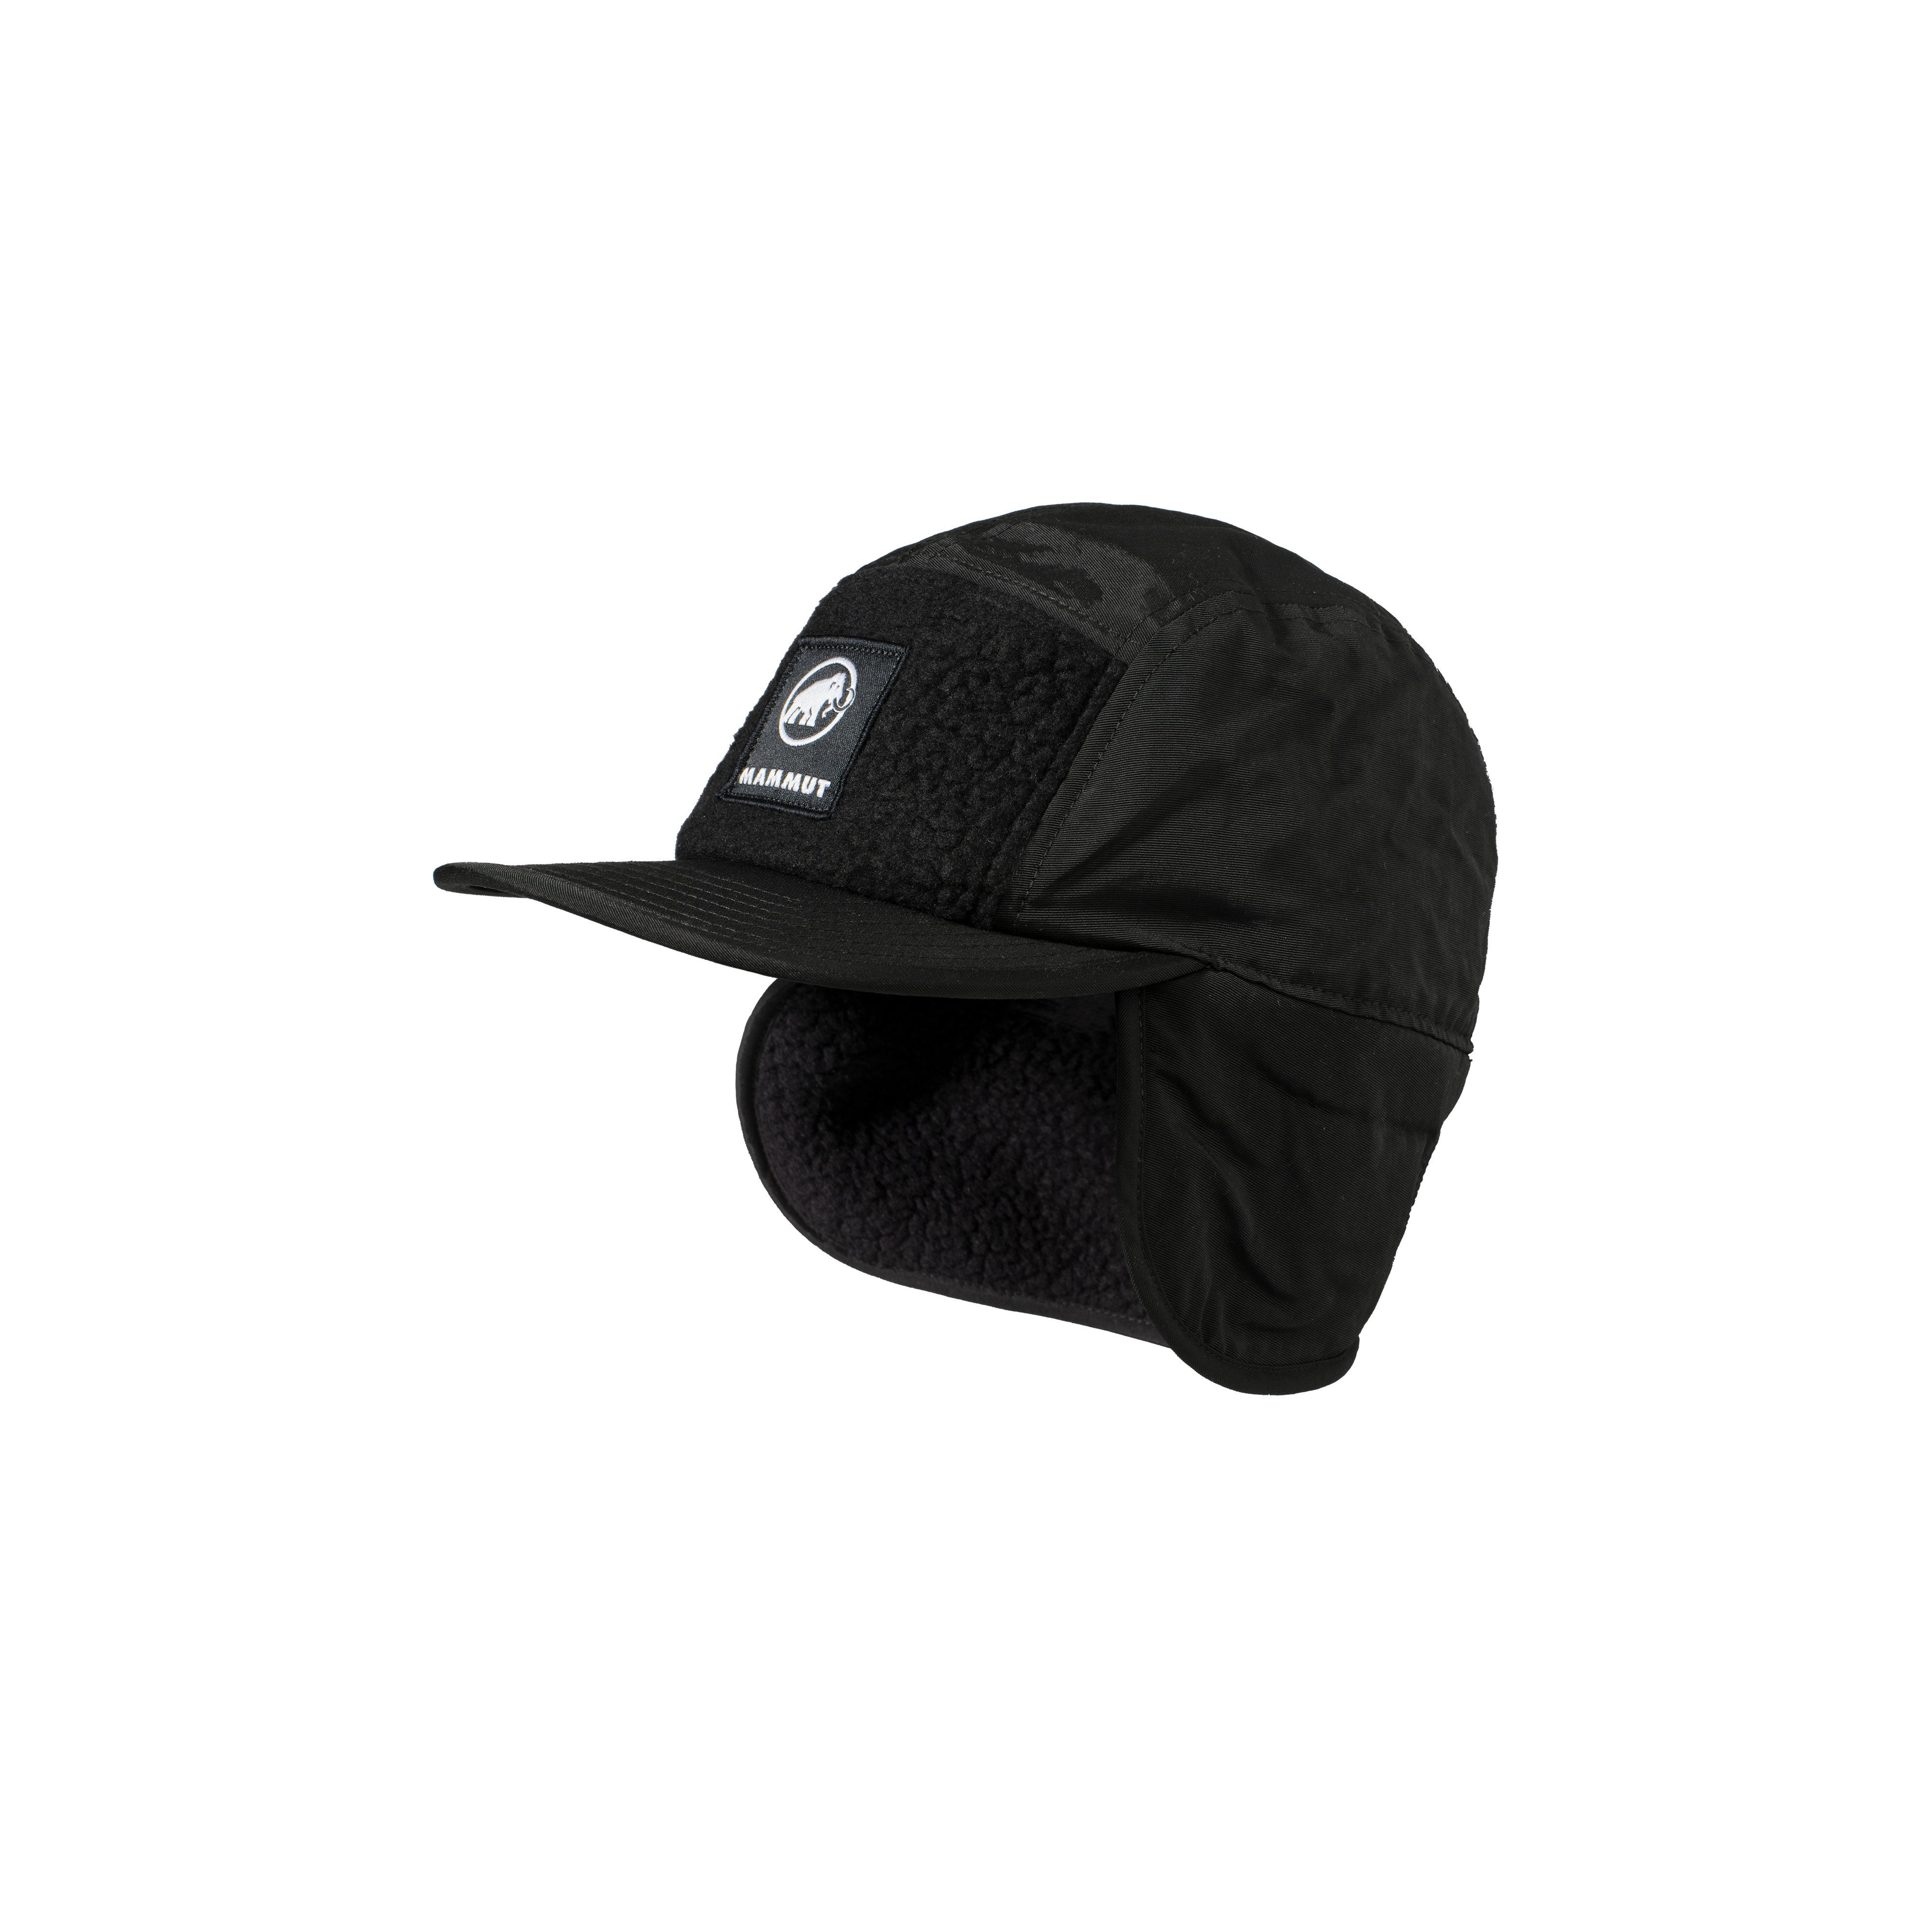 Fleece Cap - black, S-M product image